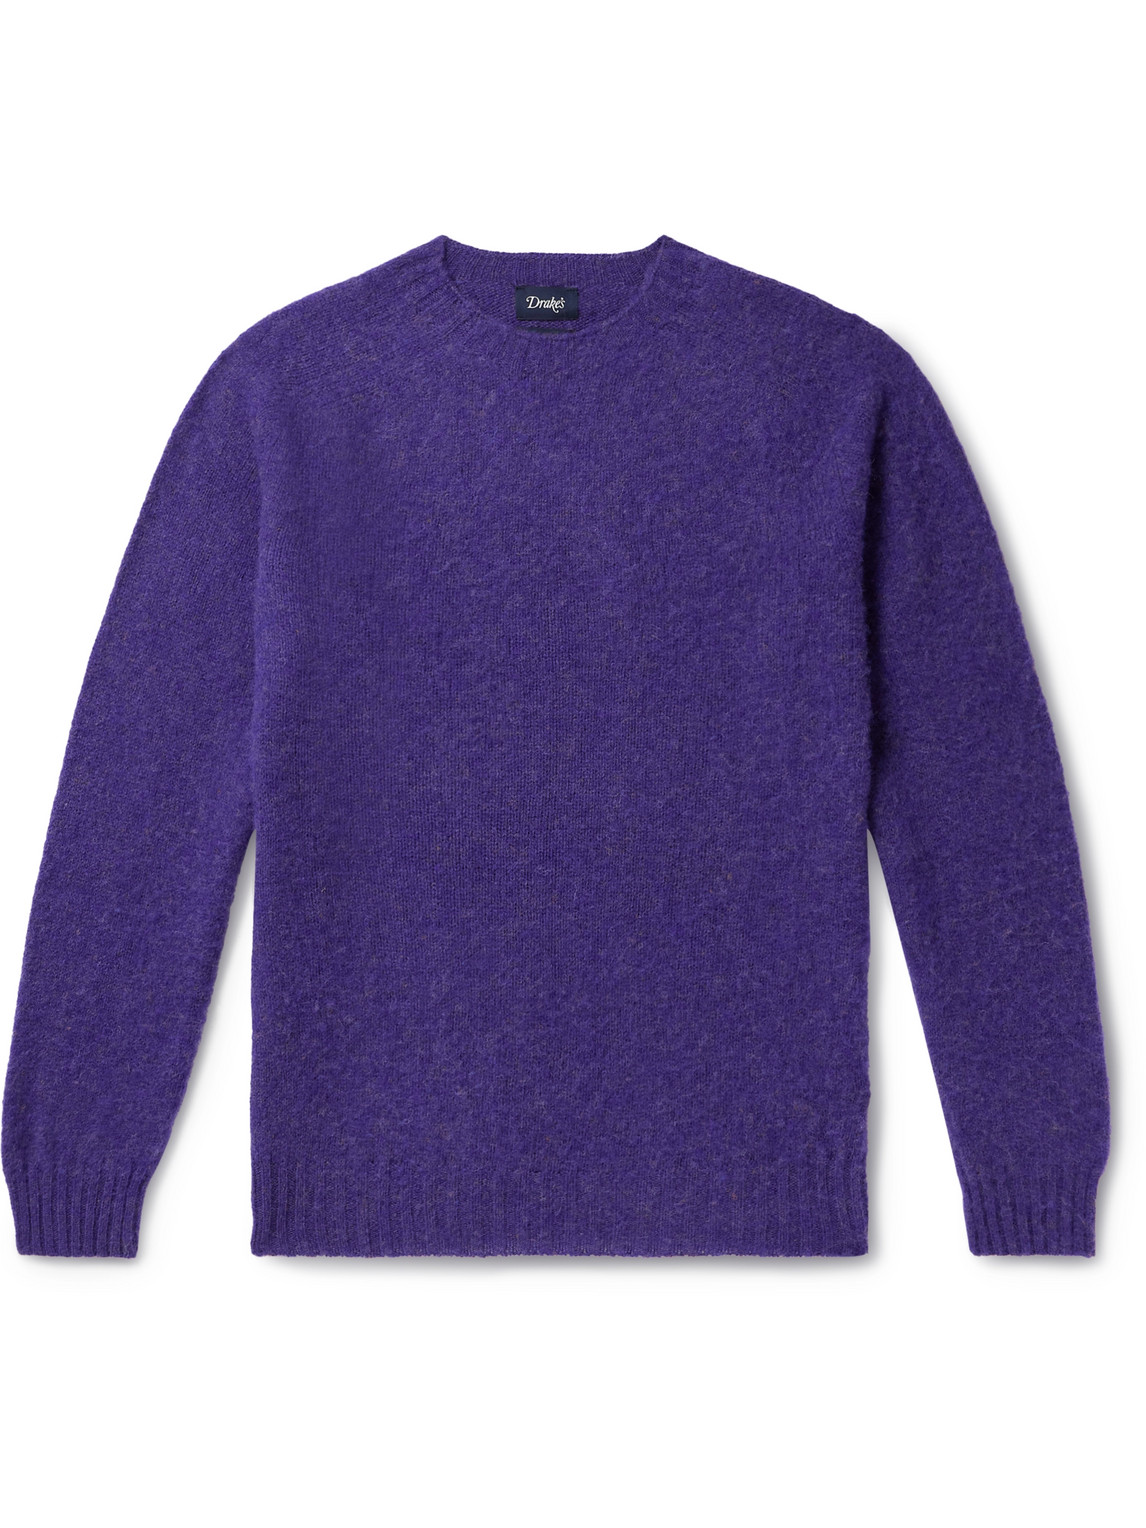 Drake's Brushed Virgin Shetland Wool Jumper In Purple